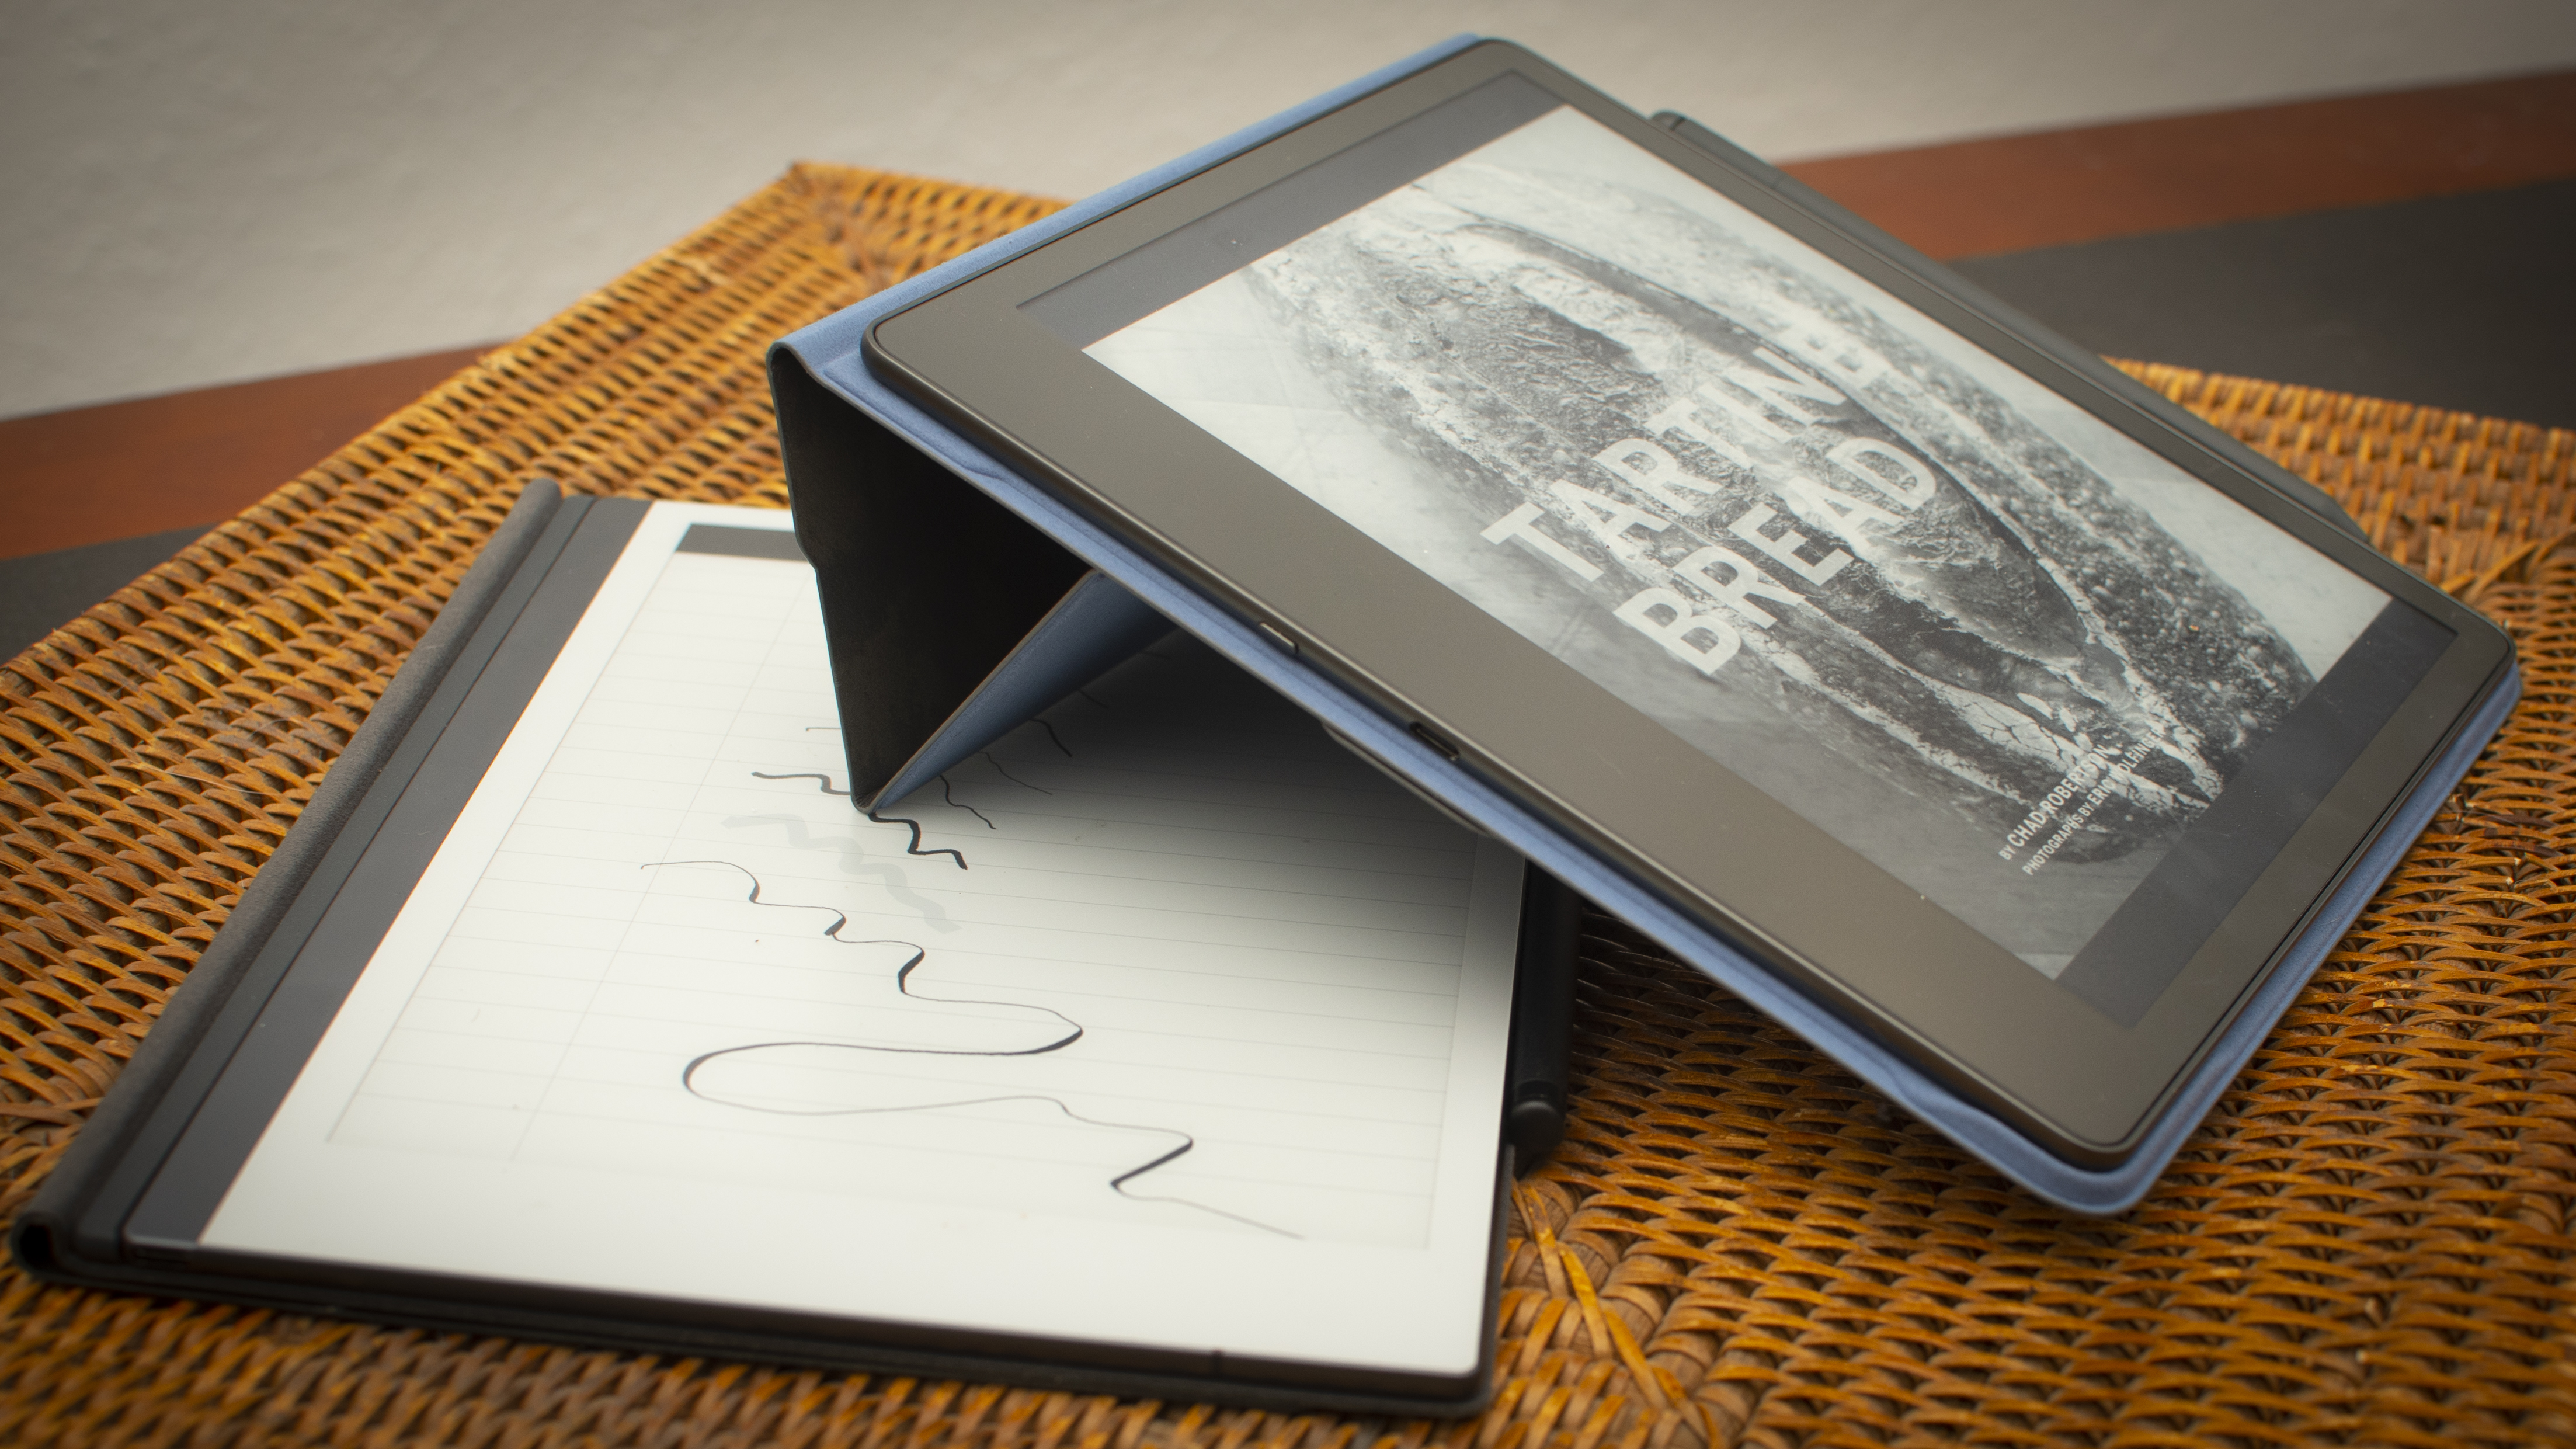 Kobo Elipsa review: A versatile E-Ink ebook reader and notetaker